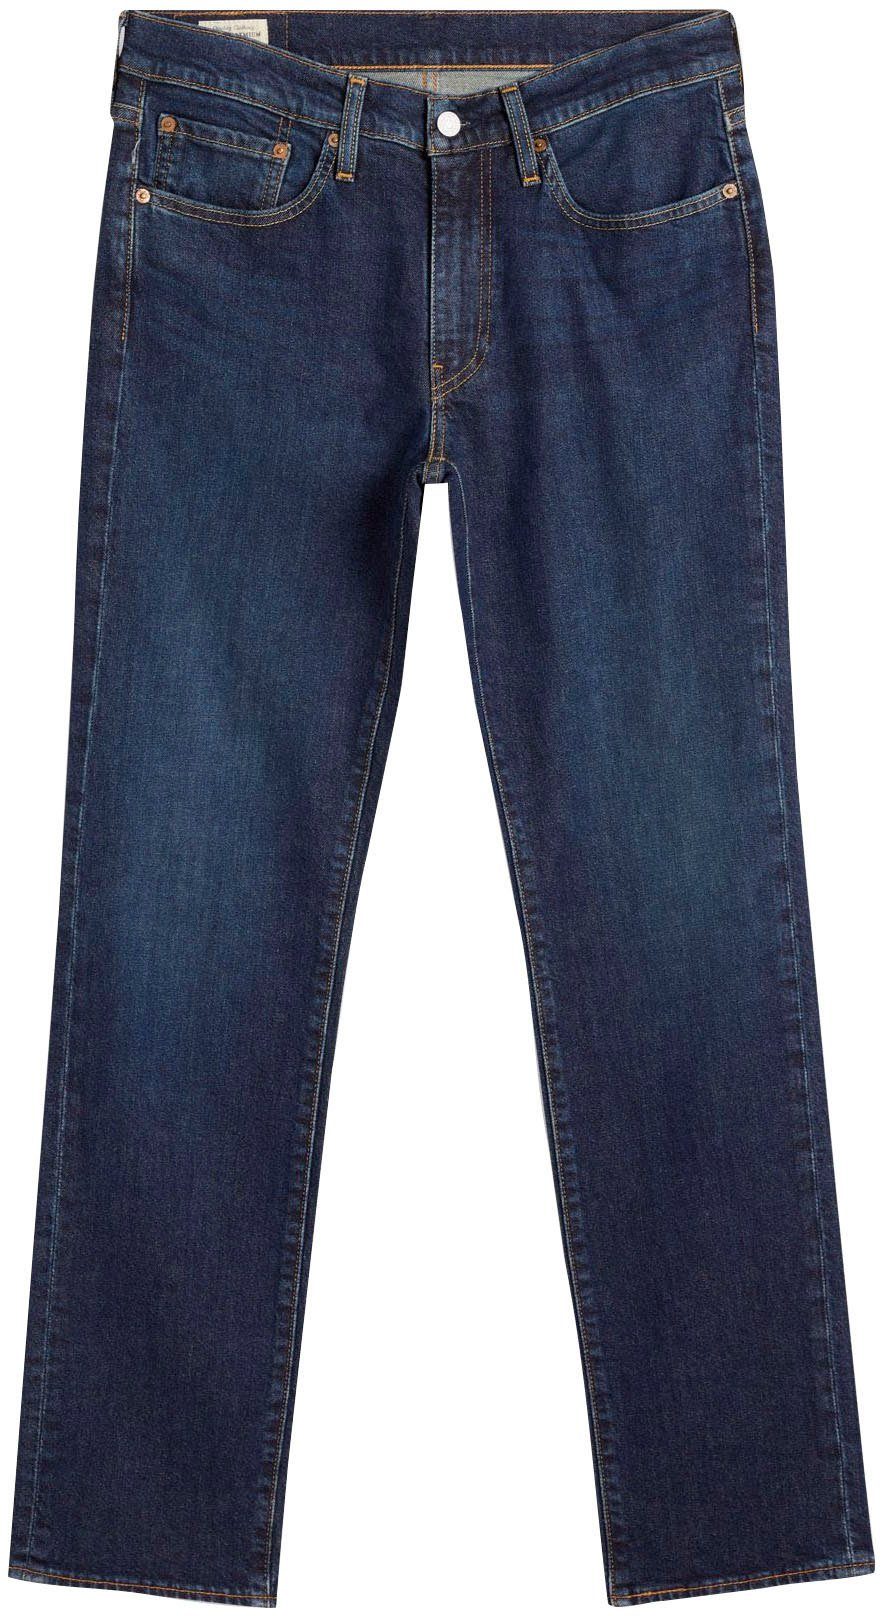 WORN MEDIUM INDIGO Levi's® Z1485 Straight-Jeans 514™